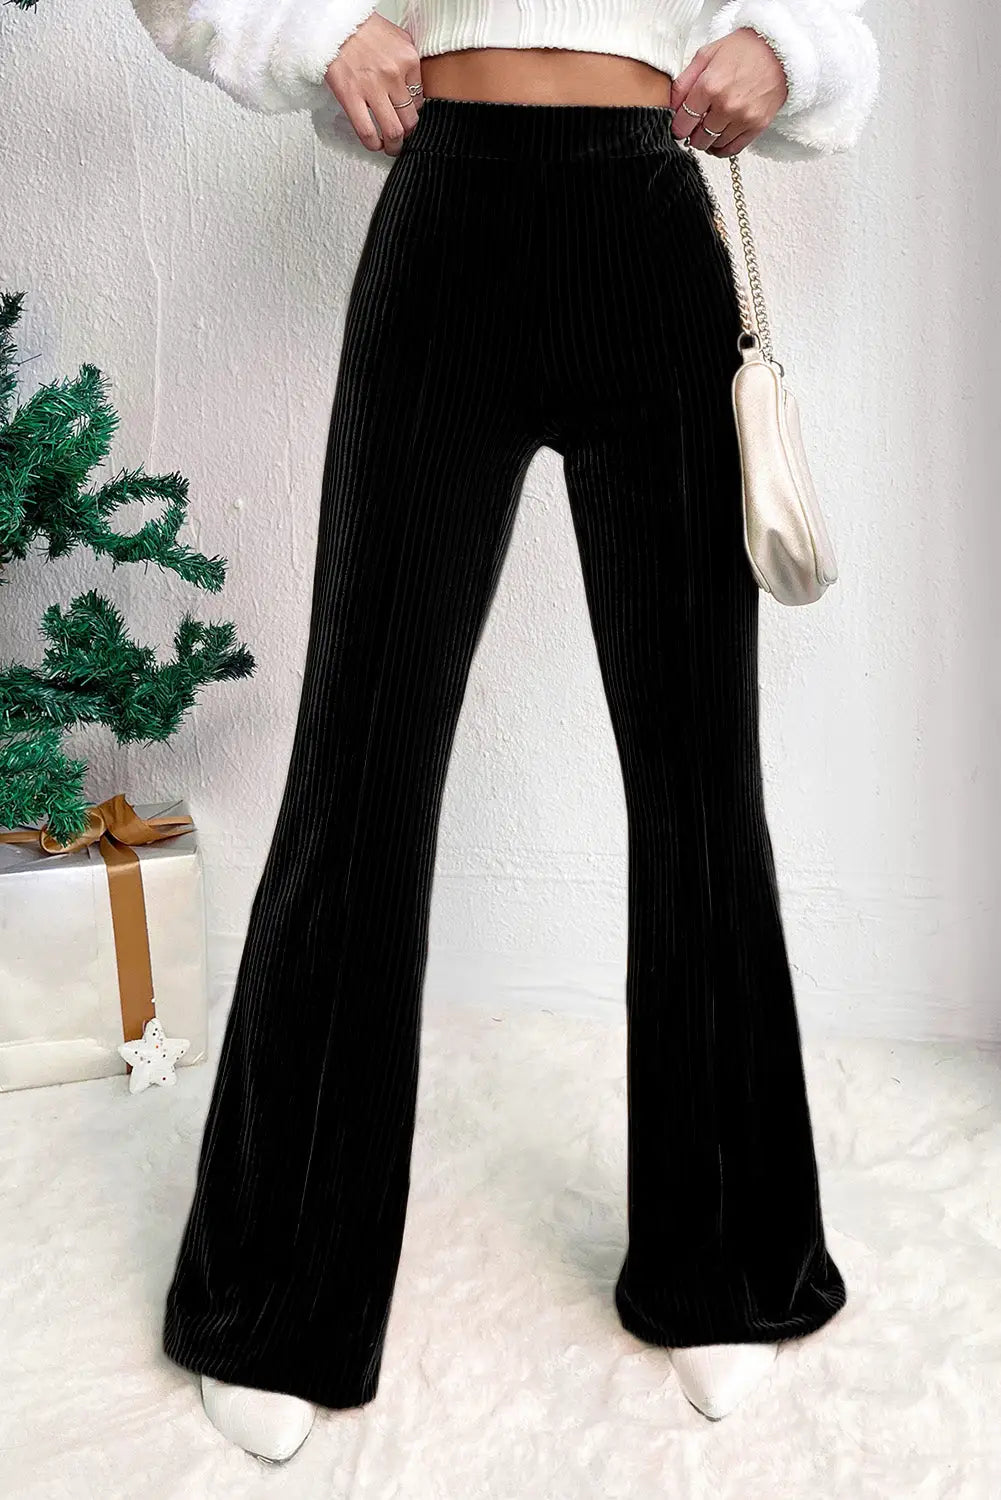 Black solid color high waist flare corduroy pants - l / 90% polyester + 10% elastane - wide leg